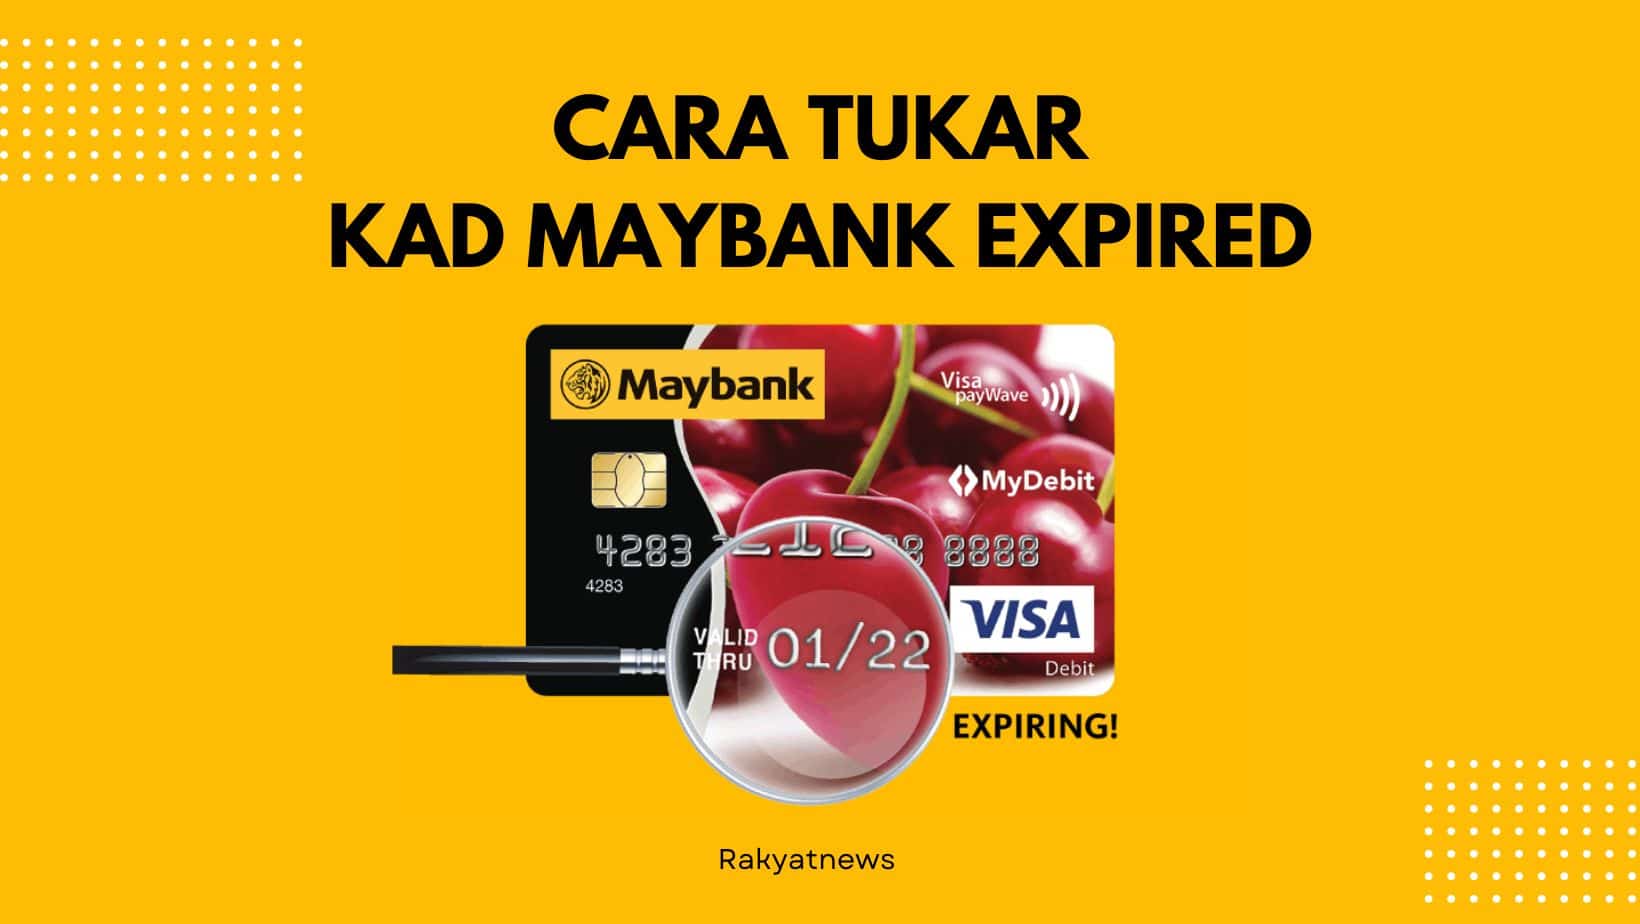 Cara Tukar Kad Maybank Expired